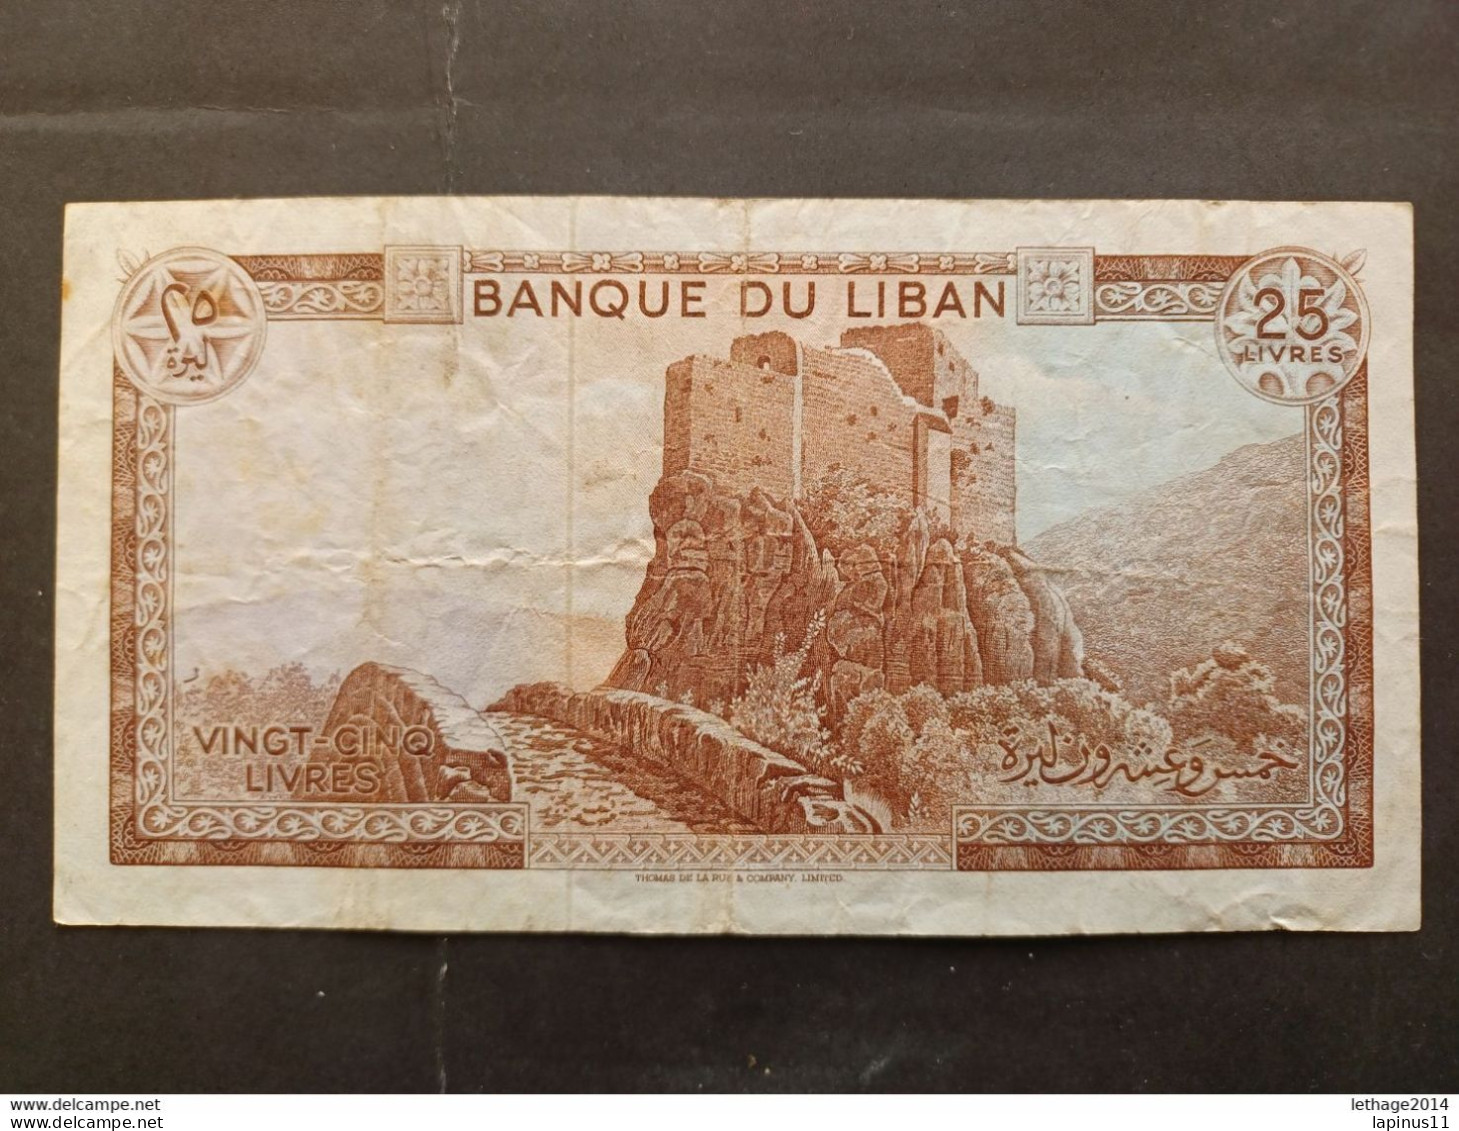 BANKNOTE LEBANON لبنان LIBAN 6x25 LIVRES 1974 CIRCULATED GOOD CONDITION - Lebanon